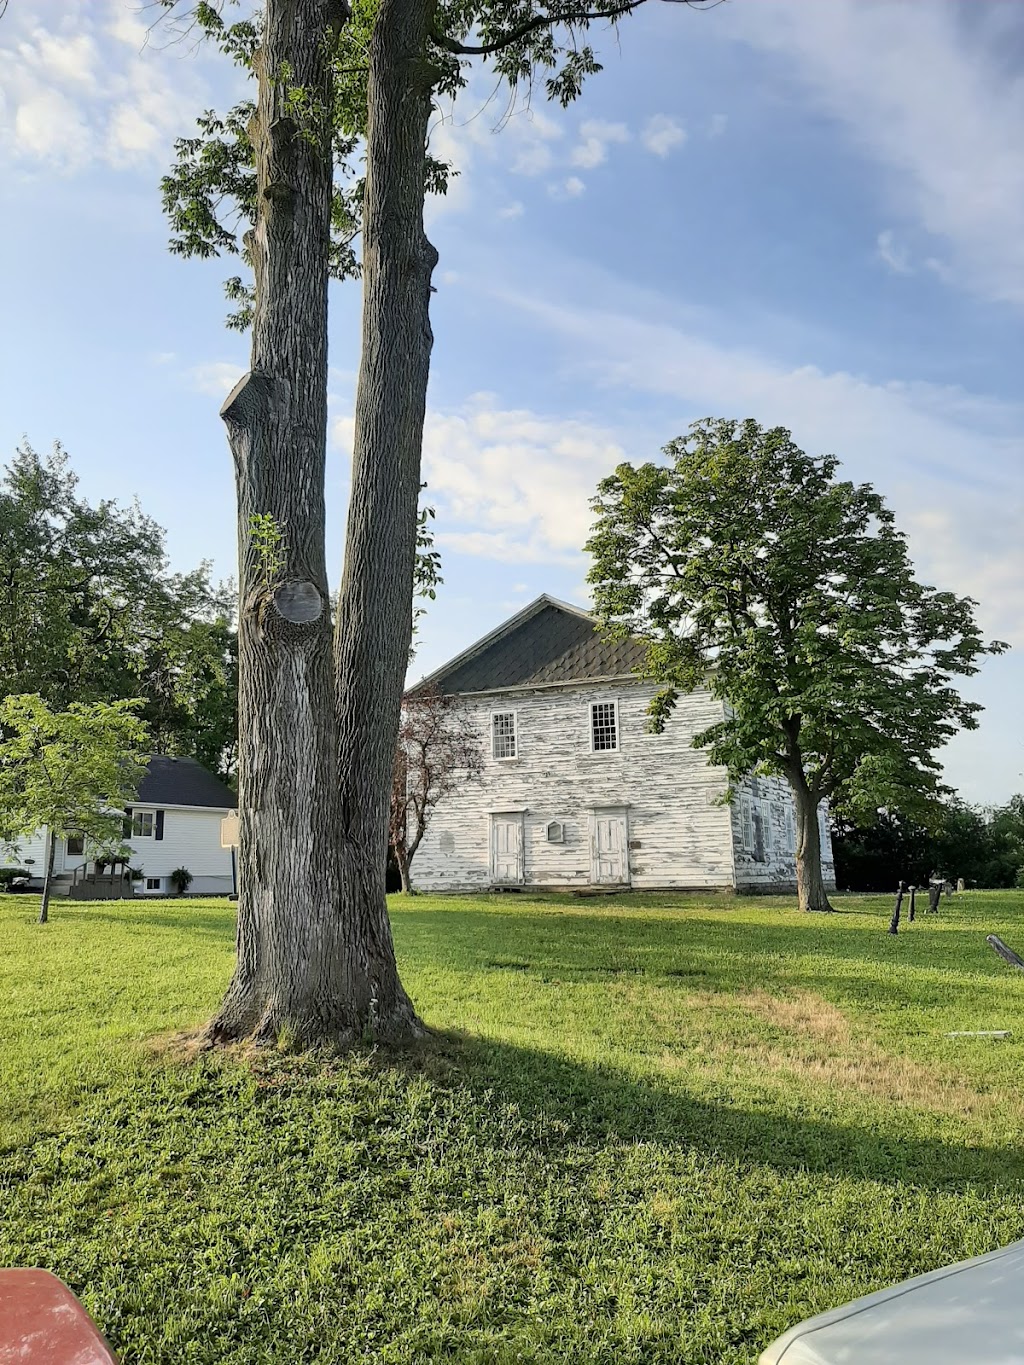 Historic Beaverdams Church | 0 Marlatts Rd, Thorold, ON L2V 1N1, Canada | Phone: (905) 227-0121